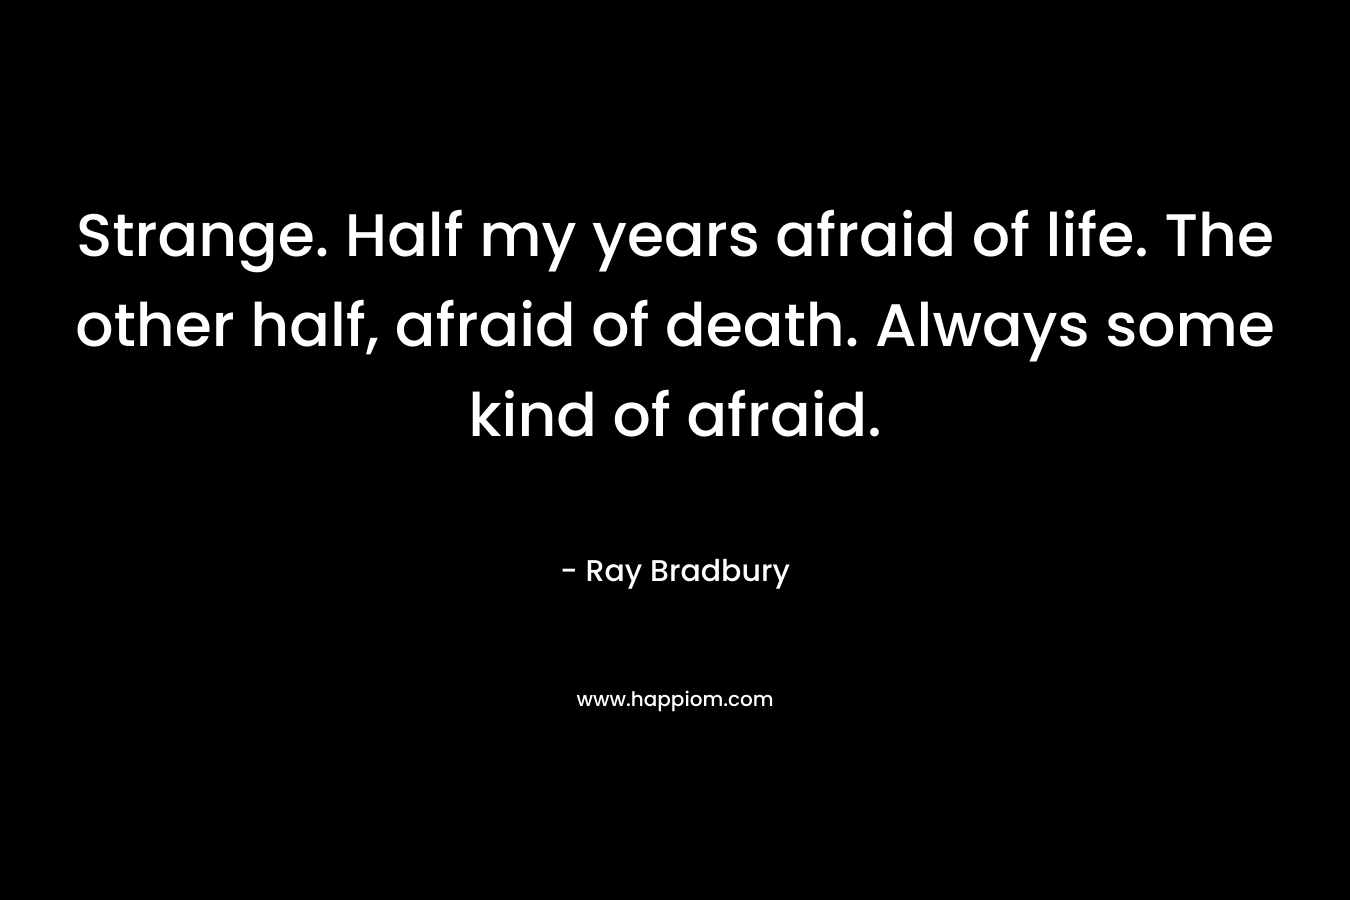 Strange. Half my years afraid of life. The other half, afraid of death. Always some kind of afraid.